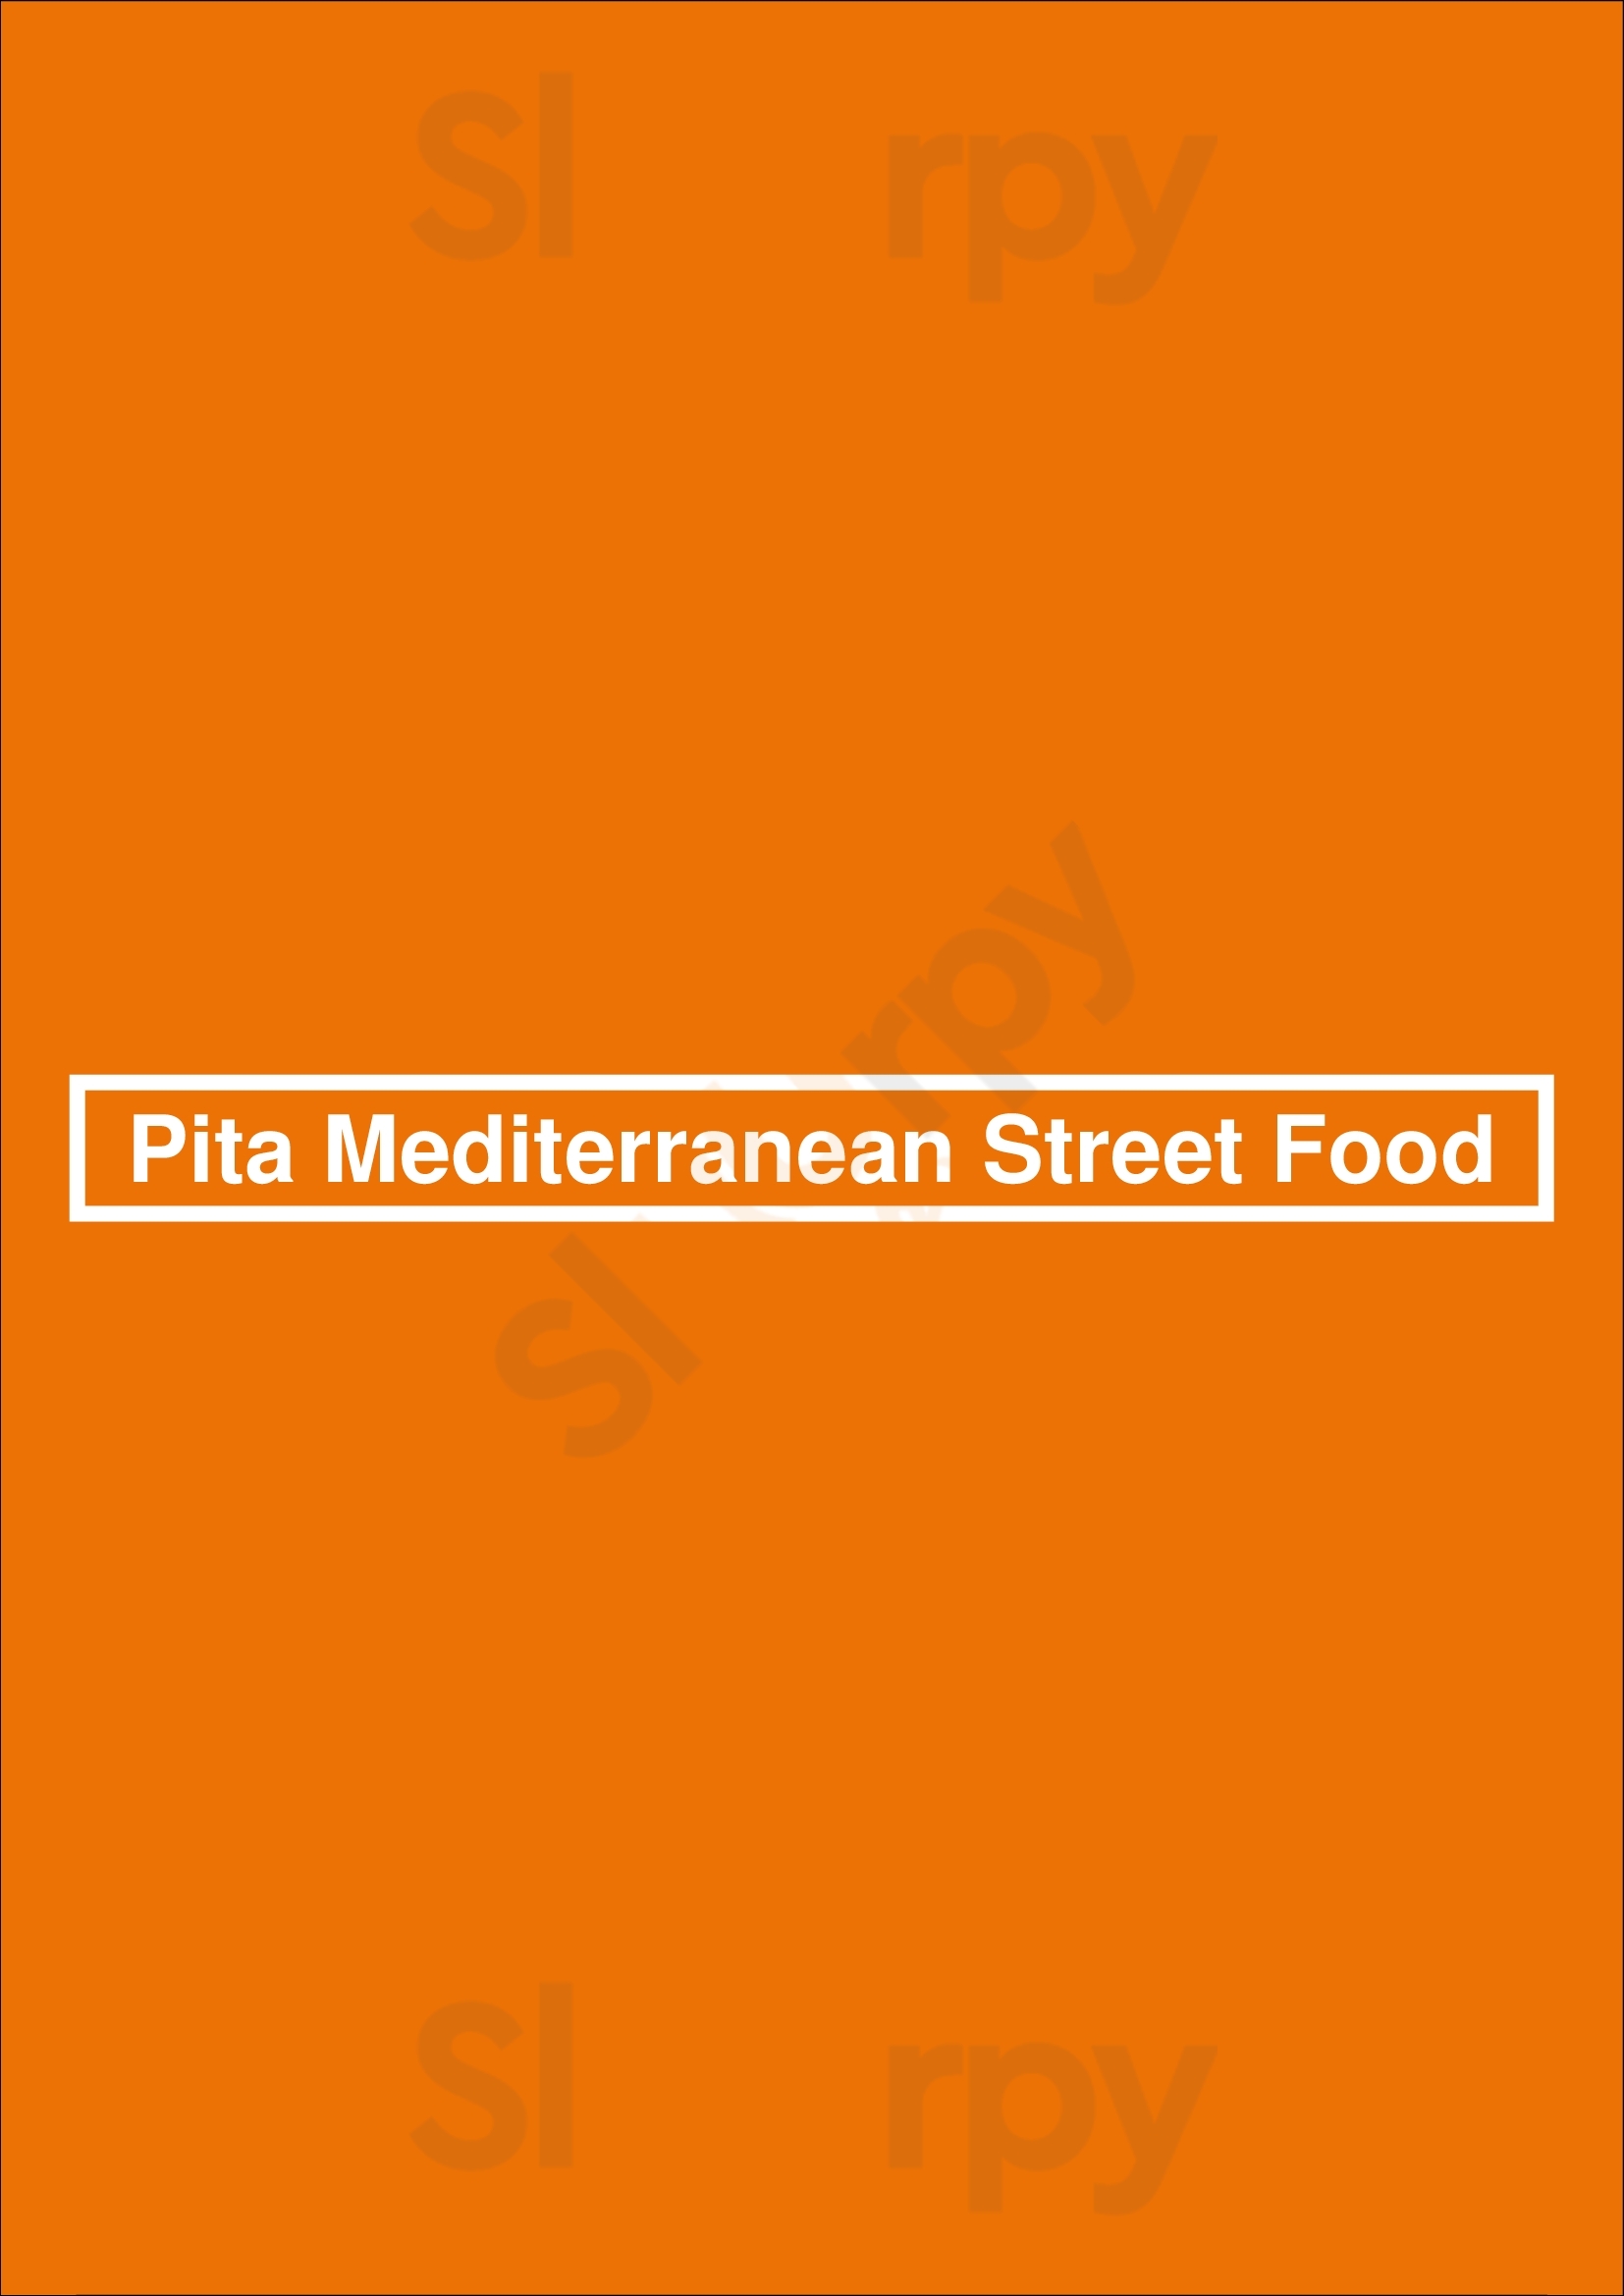 Pita Mediterranean Street Food Smyrna Menu - 1